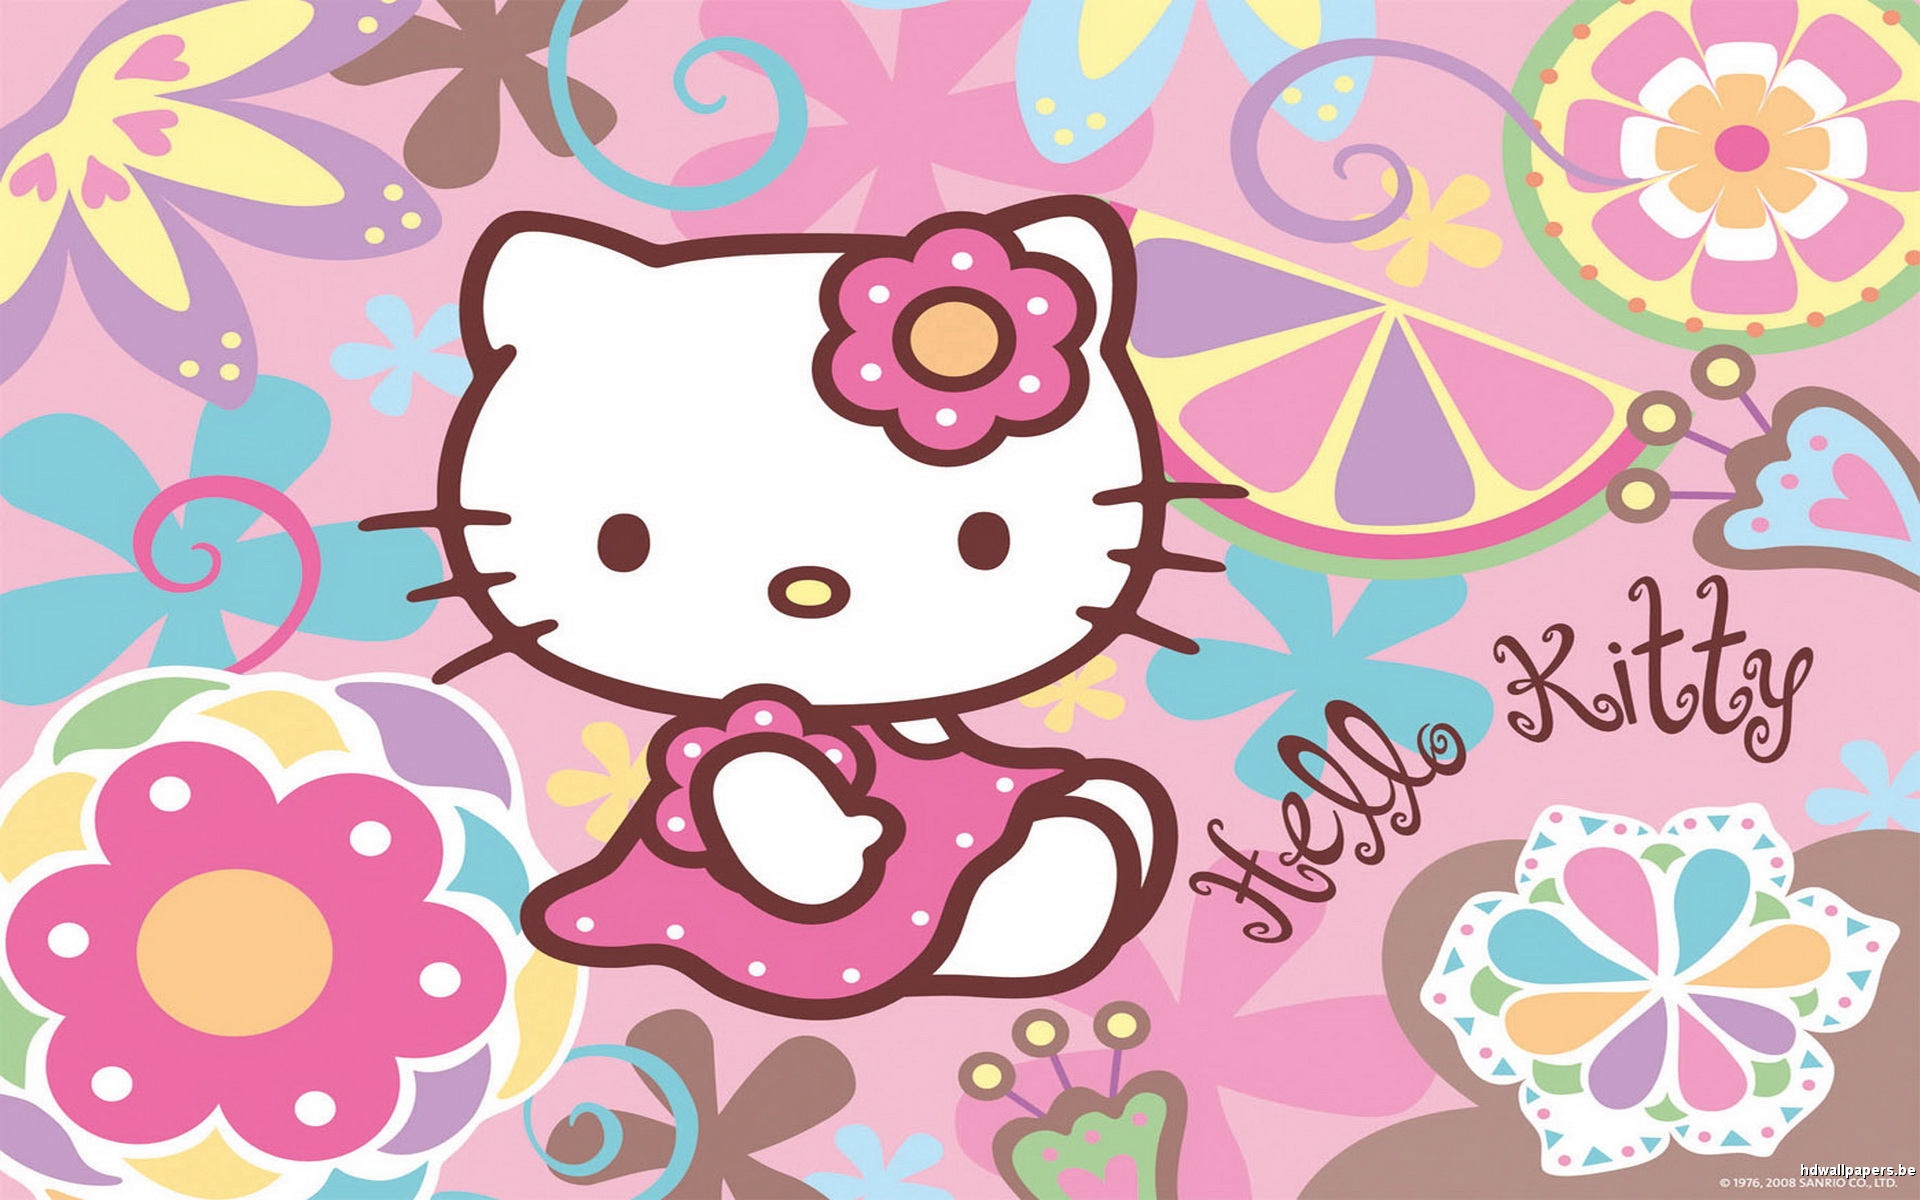  50 Hello  Kitty  Screensavers  Wallpapers on WallpaperSafari